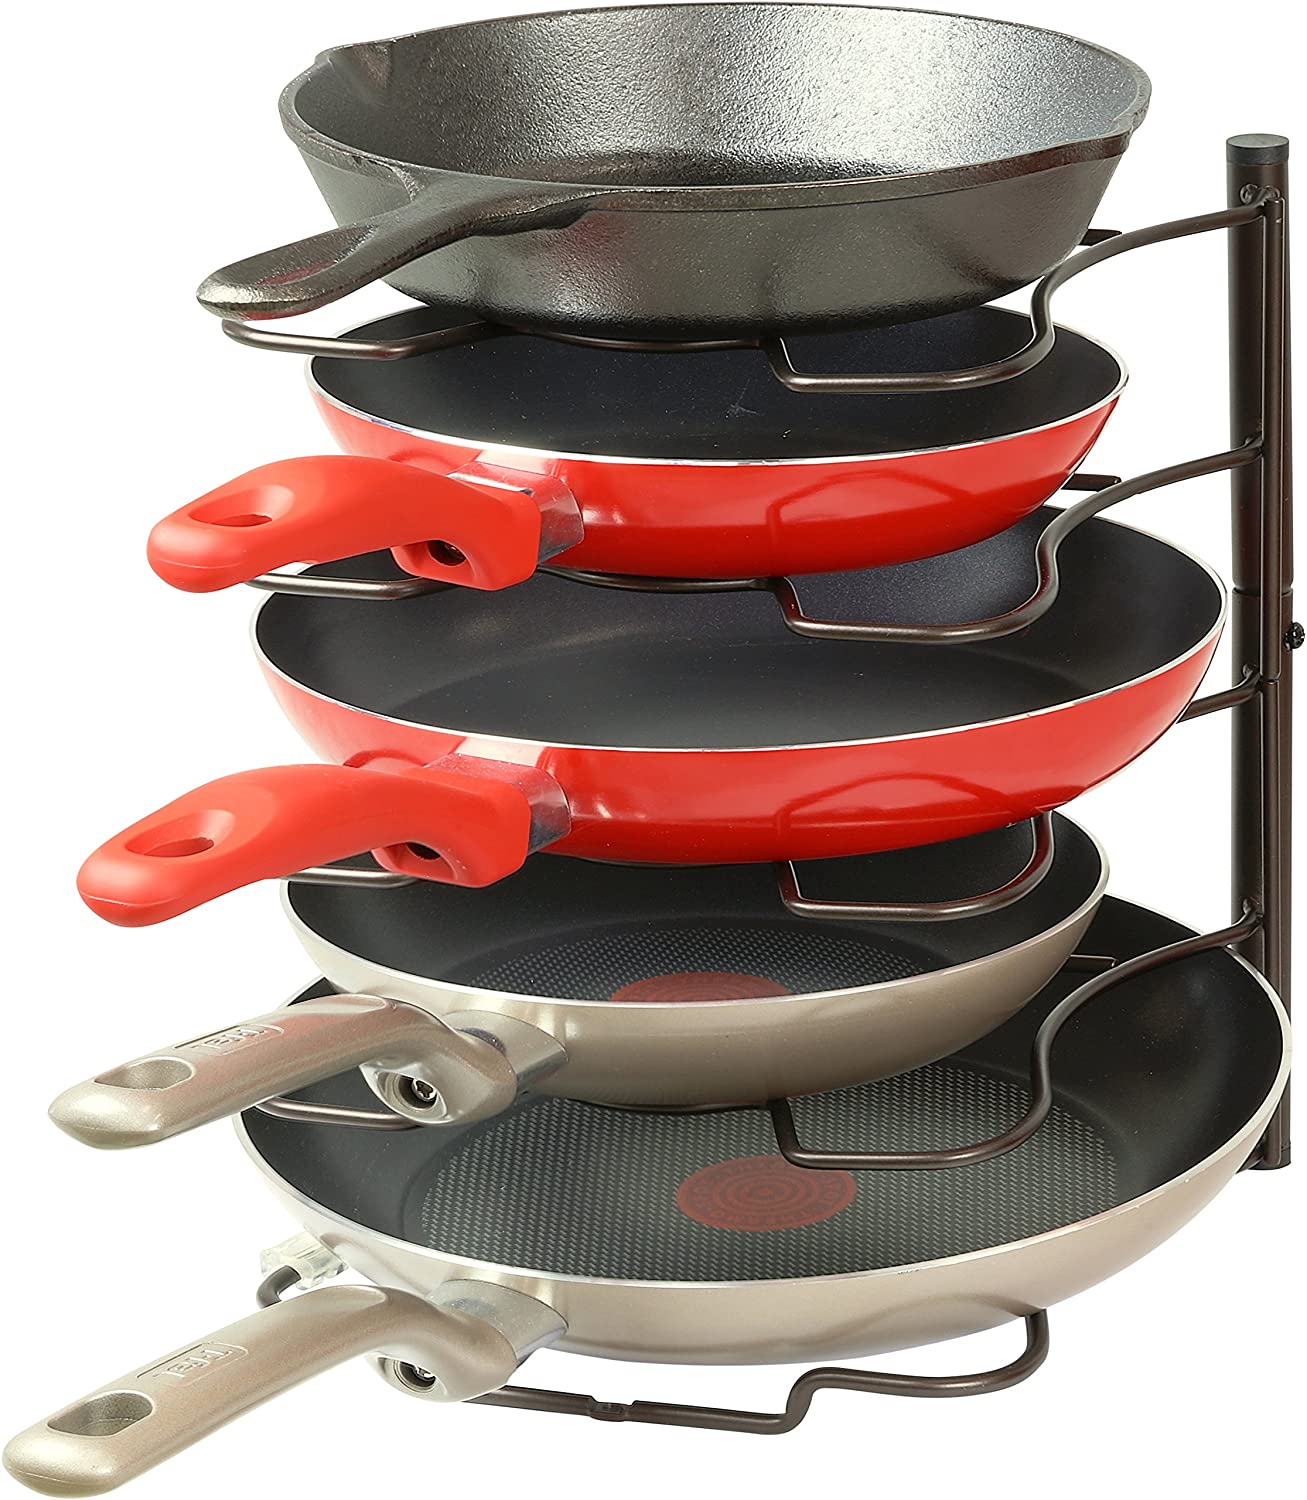 Five pans in rack holder